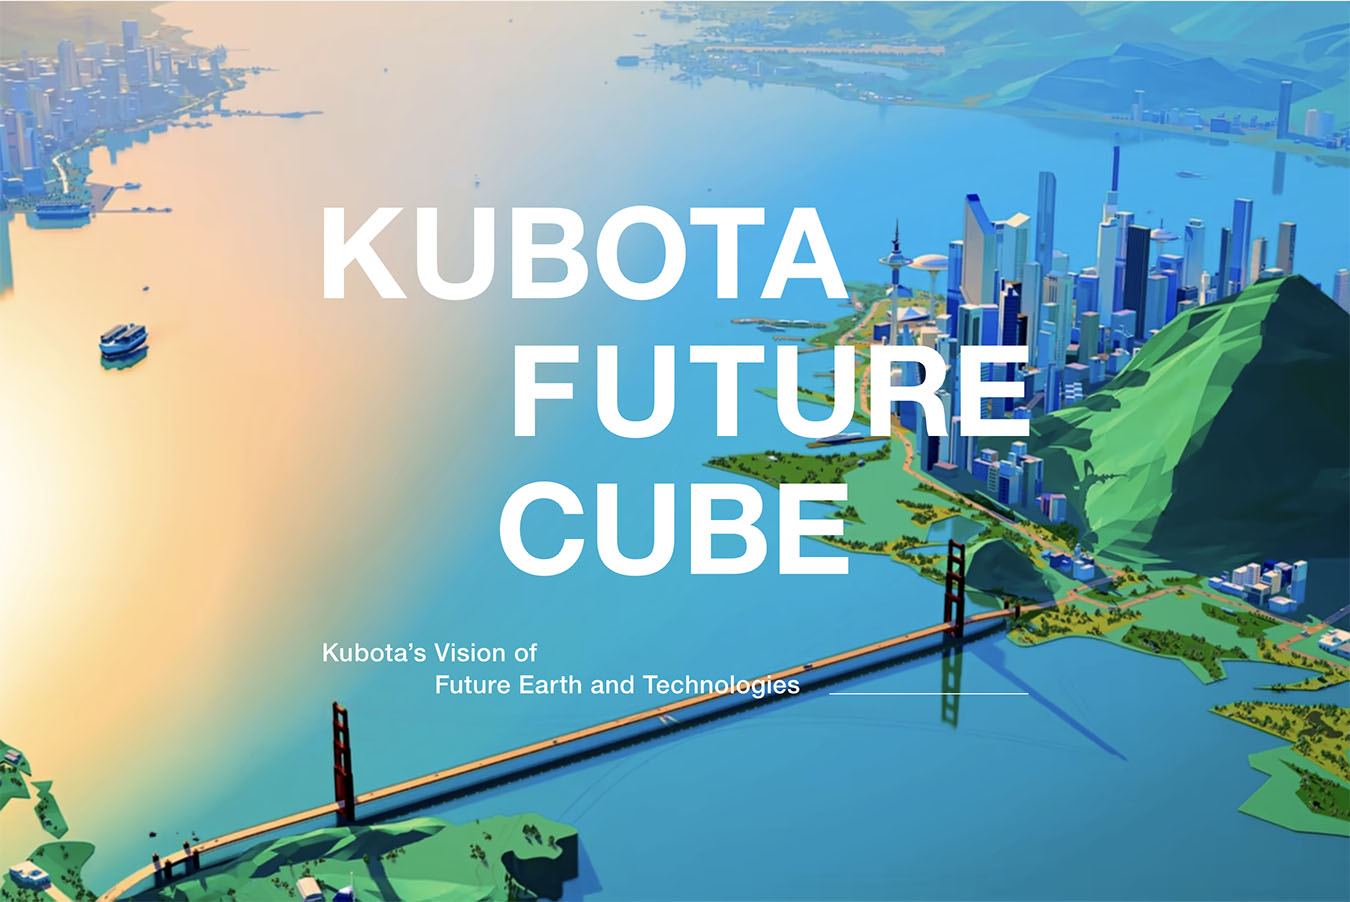 KUBOTA FUTURE CUBE